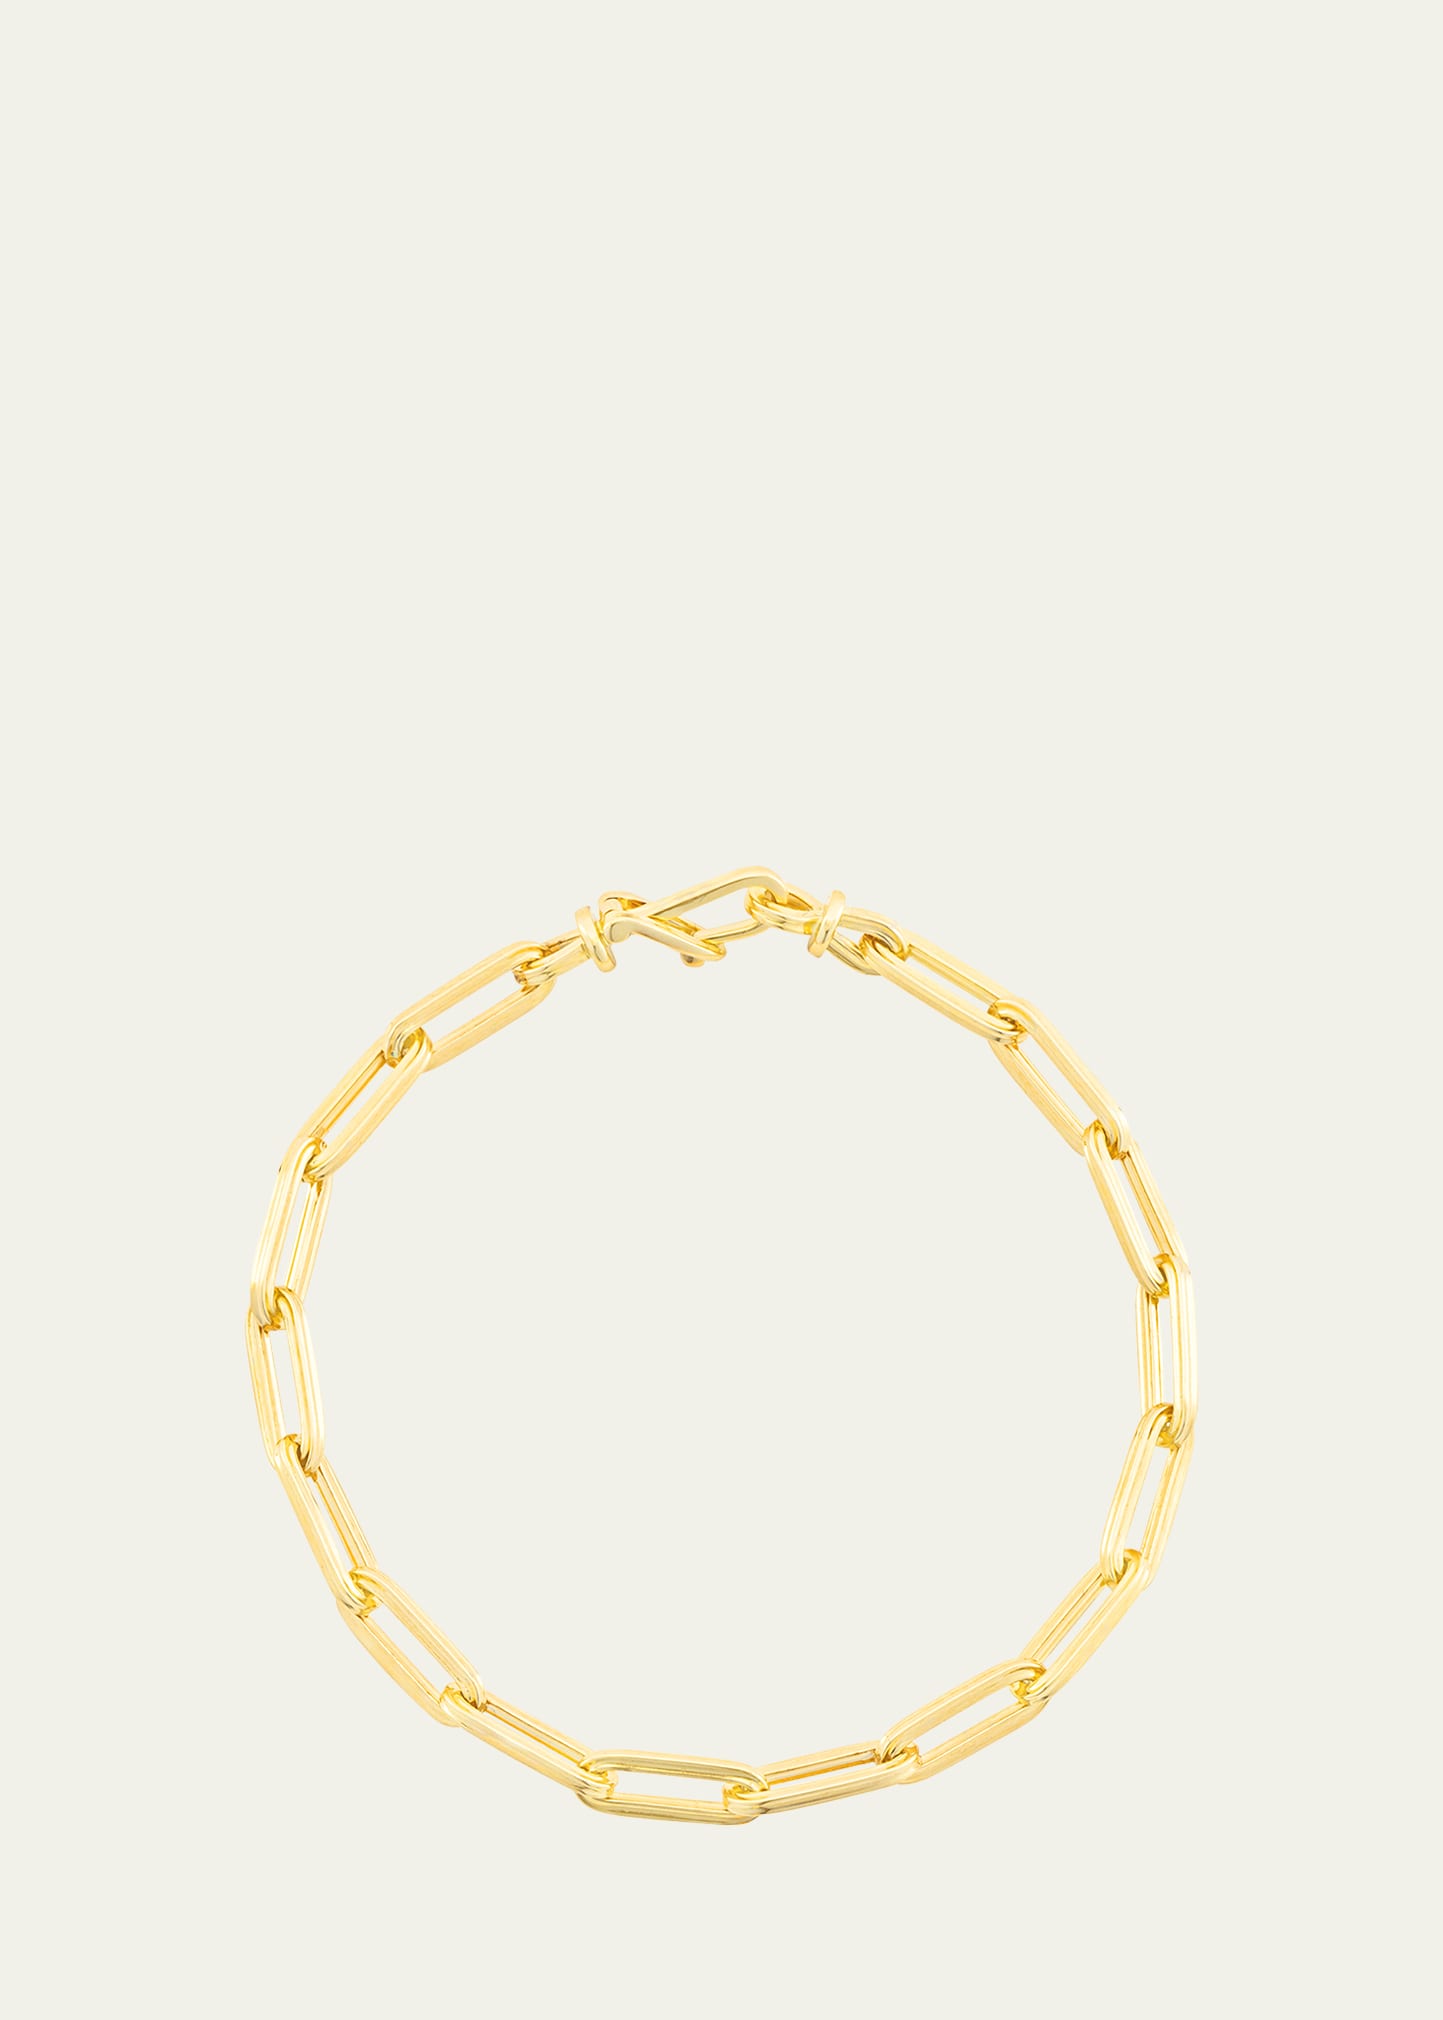 Mellerio 18k Yellow Gold Medium Rectangular Link Chain Bracelet